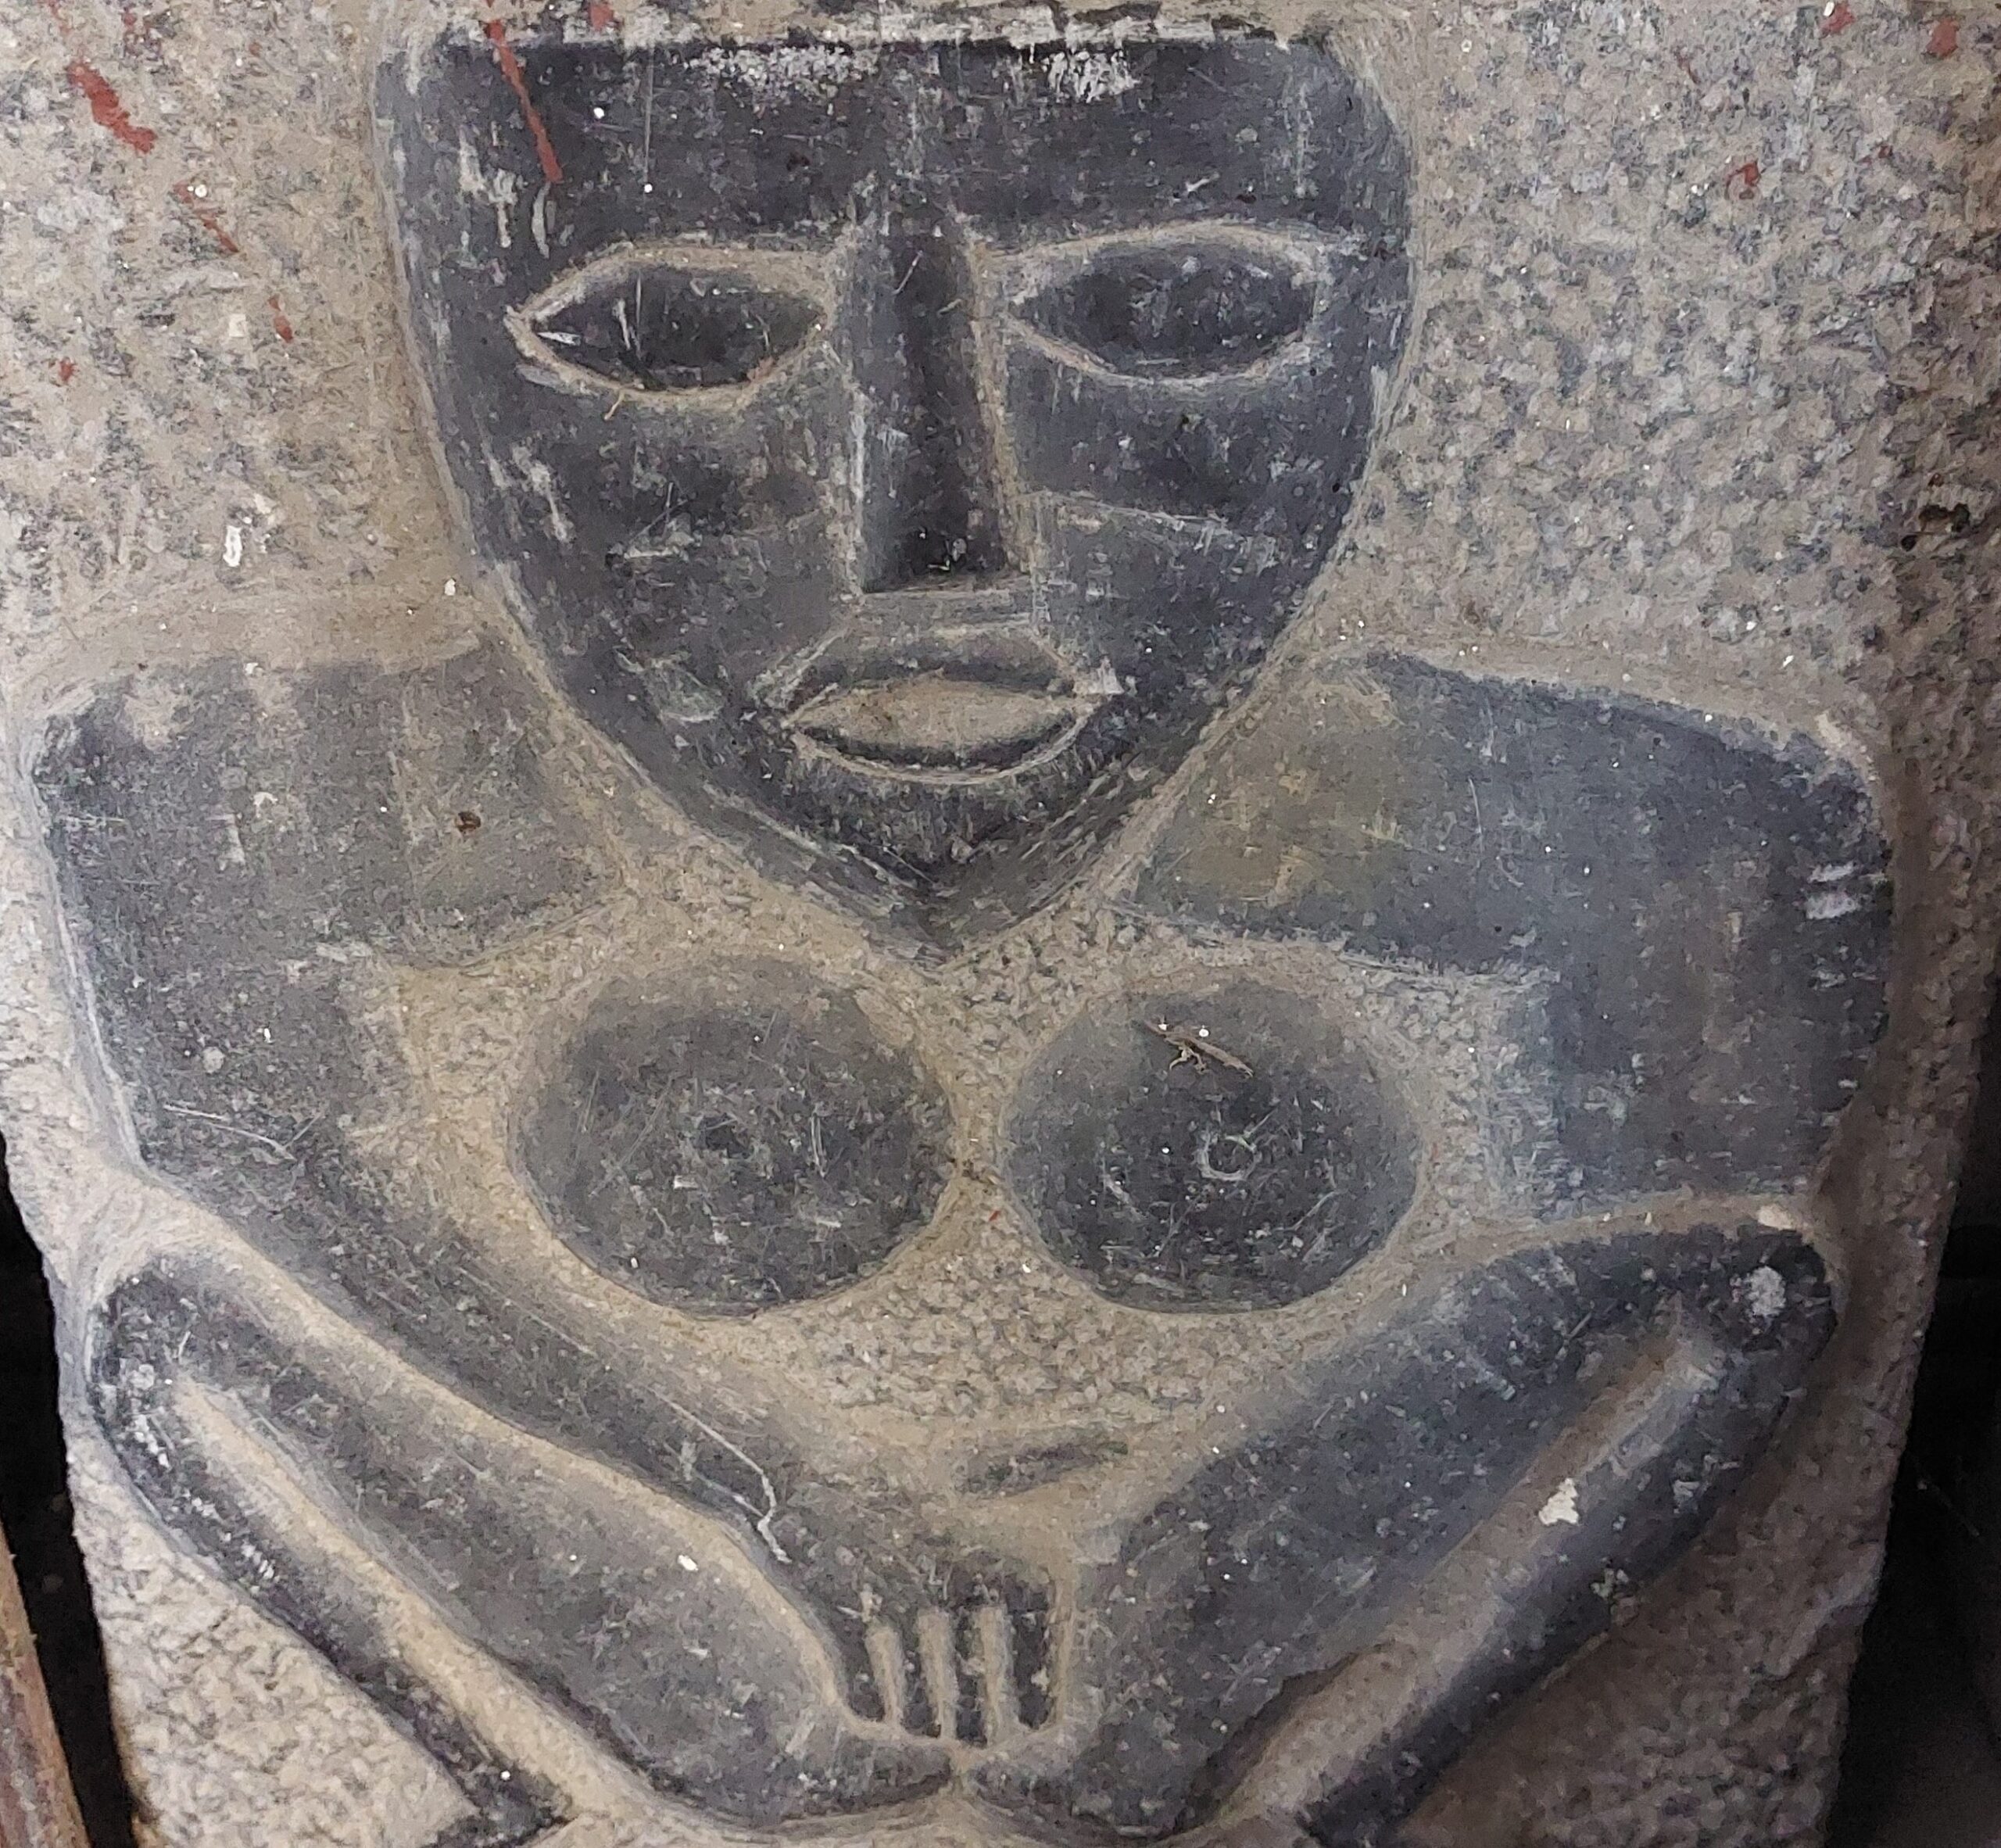 A replica Sheela na Gig figure carved into stone